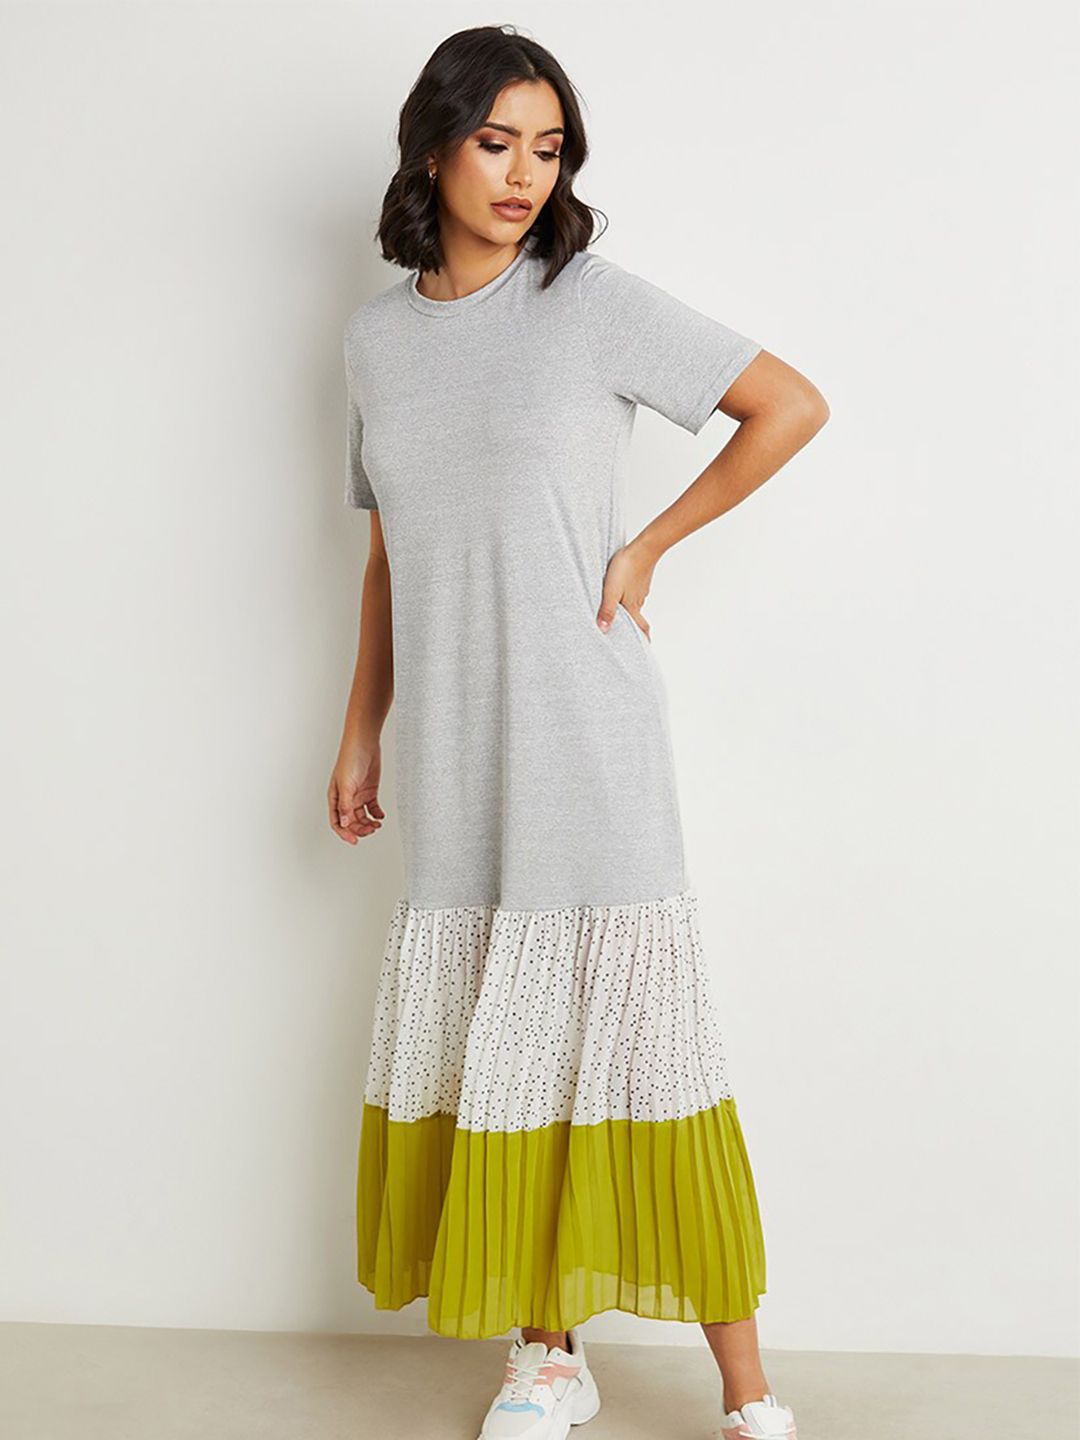 Styli Multicoloured A-Line Maxi Dress Price in India